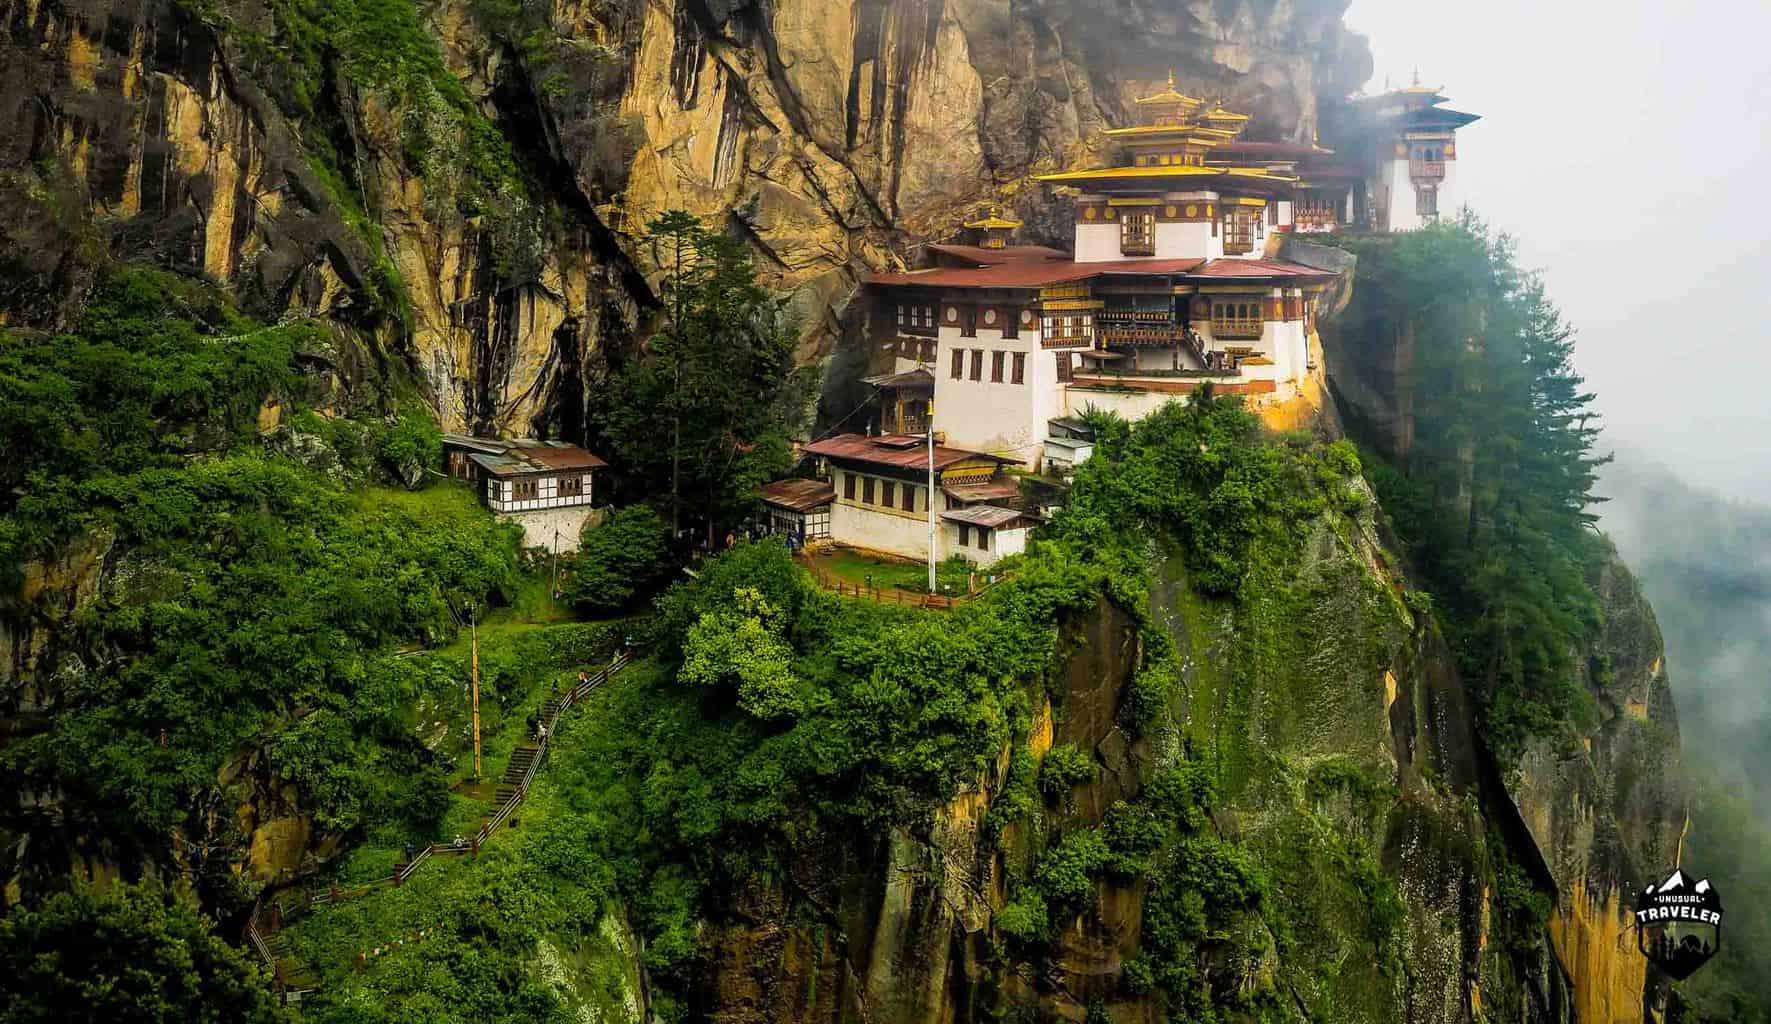 The Niger nest Monastery in Bhutan travel guide